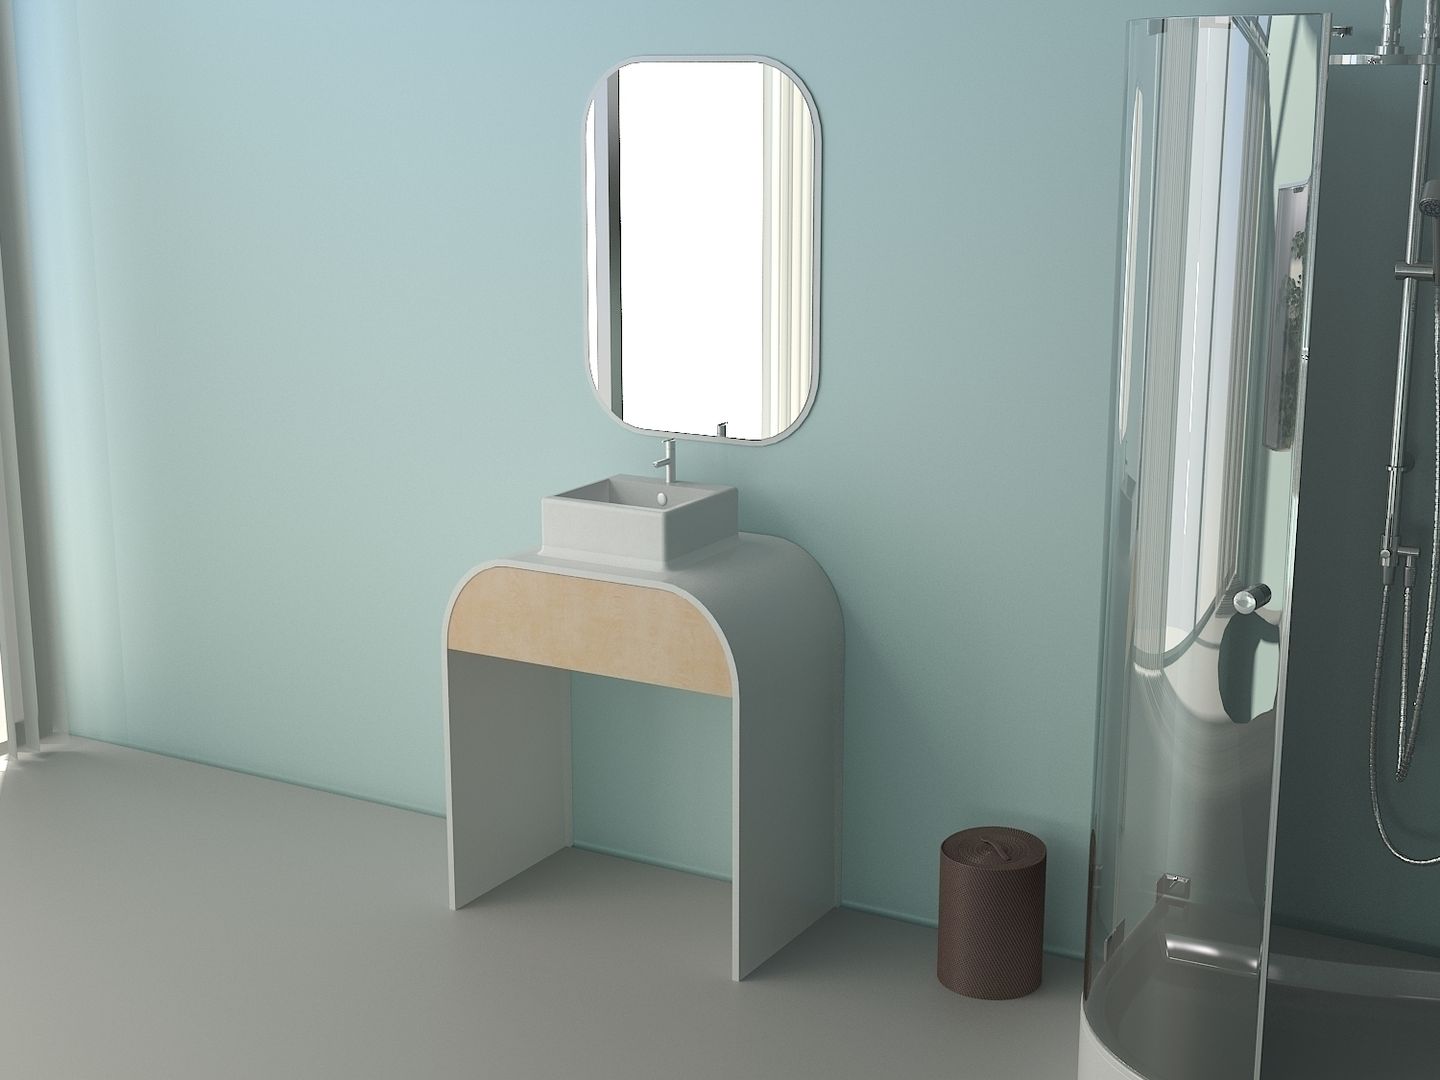 Melt Concept, Tirdad Kiamanesh Tirdad Kiamanesh حمام Medicine cabinets